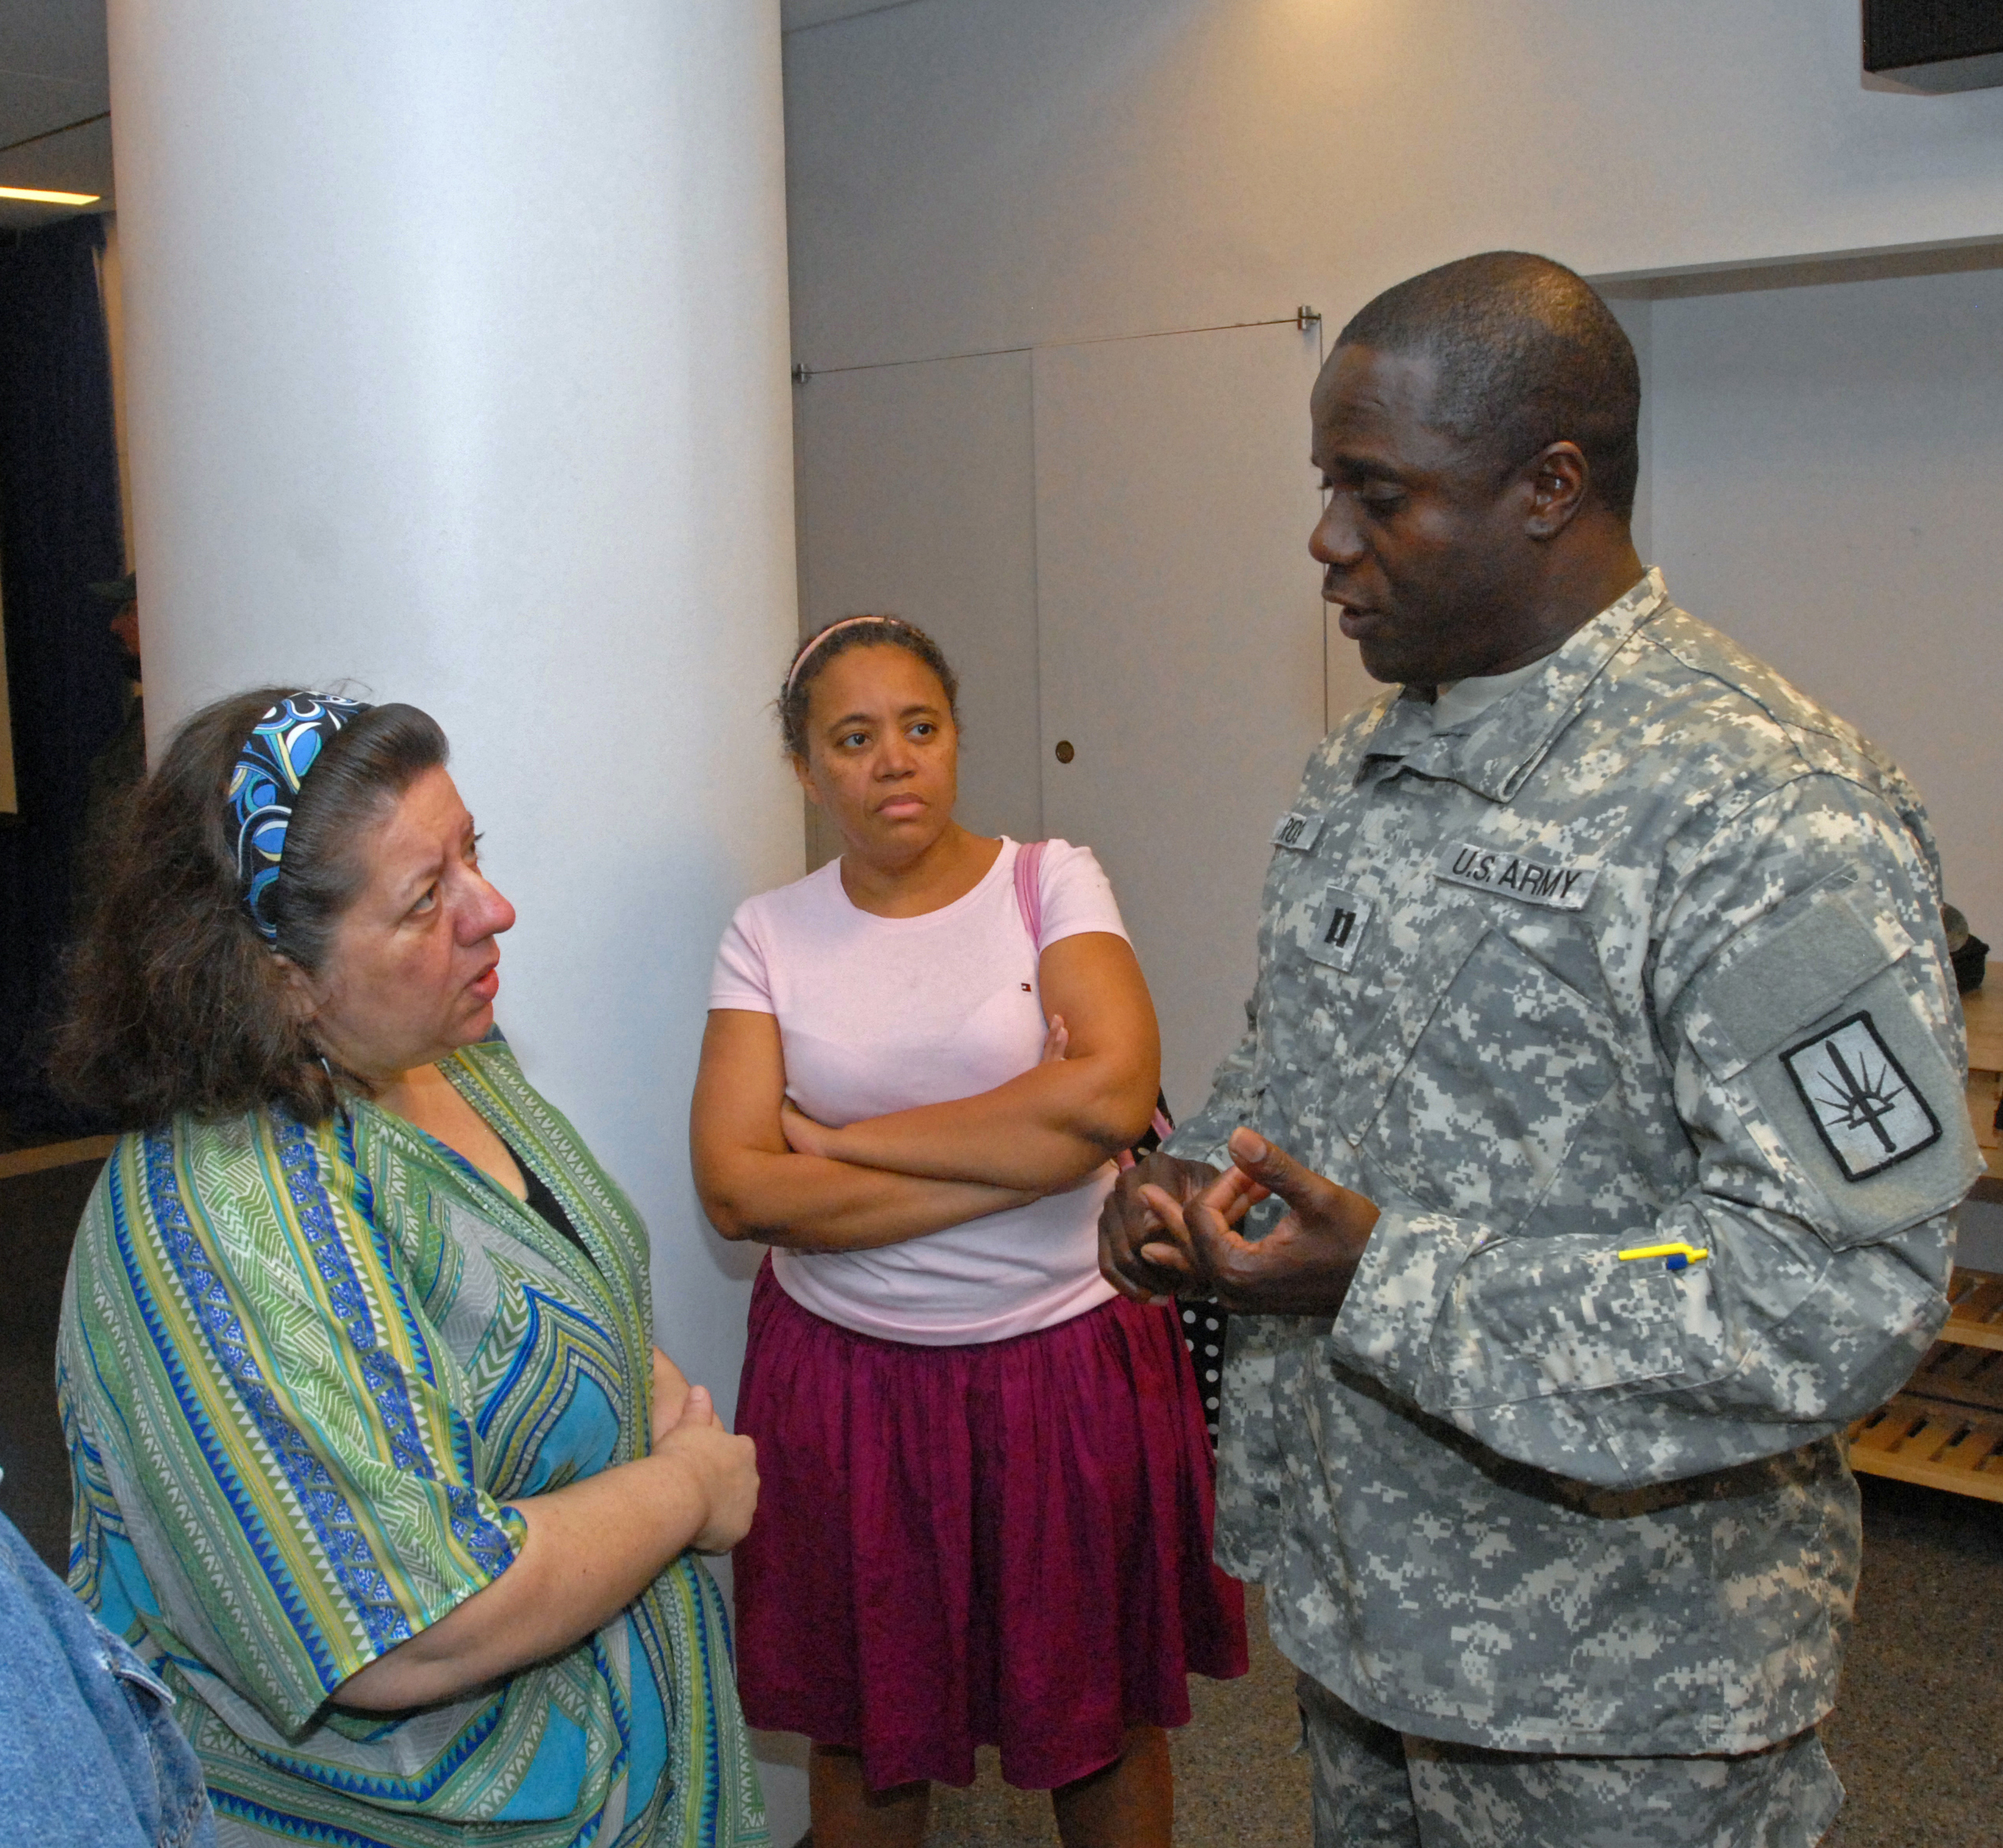 Citizen Preparedness Corps Training Program, United Nations International School, New York City, Aug. 12, 2014